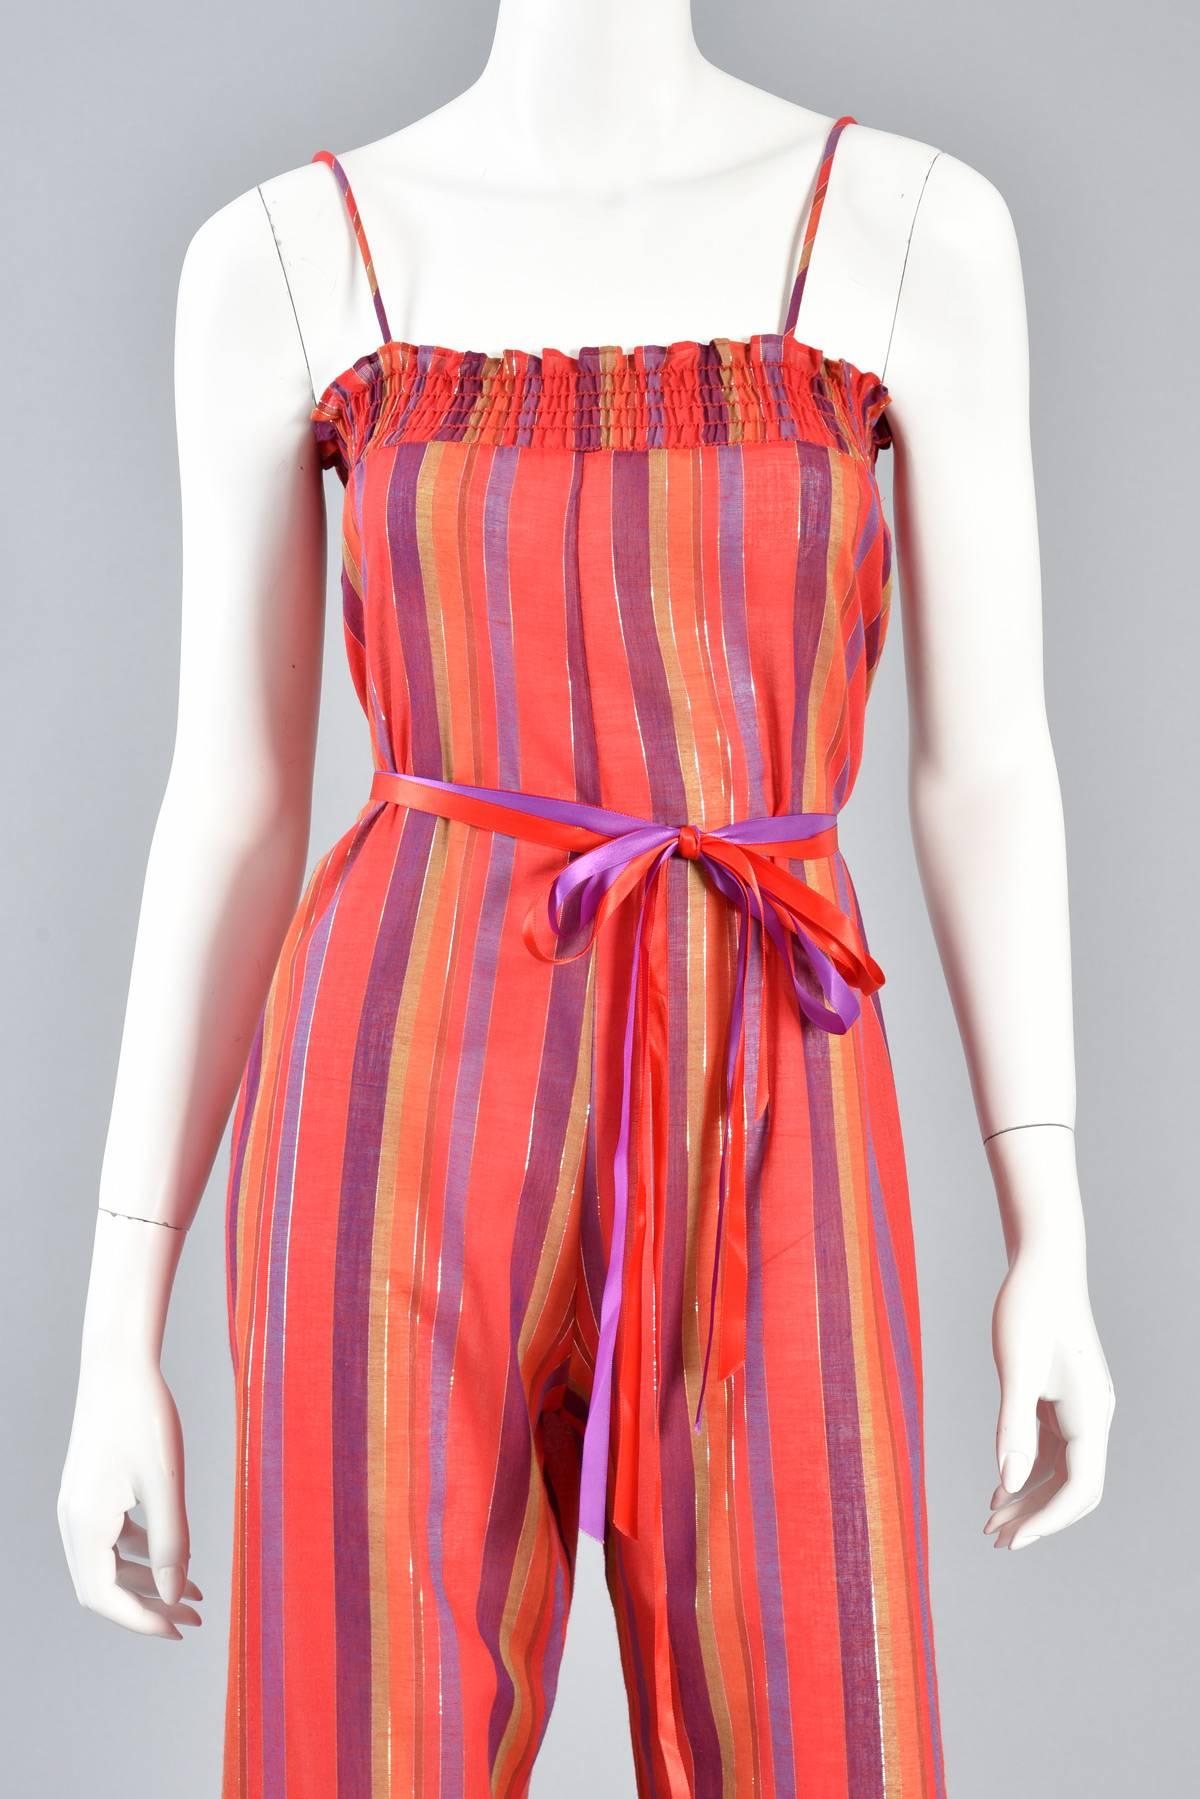 Women's or Men's 1970s Ethnic Stripe Cotton Gauze Jumpsuit with Lurex Threads